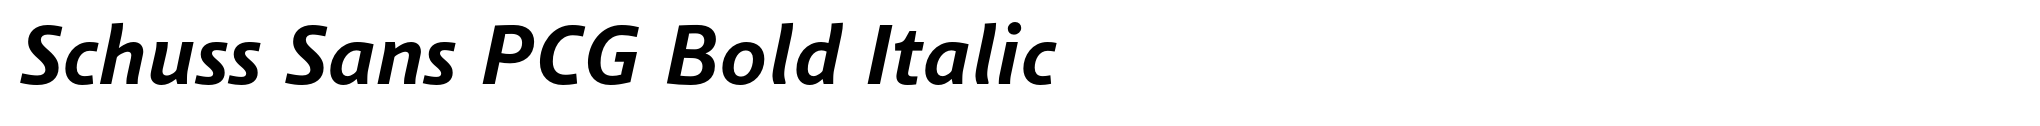 Schuss Sans PCG Bold Italic image